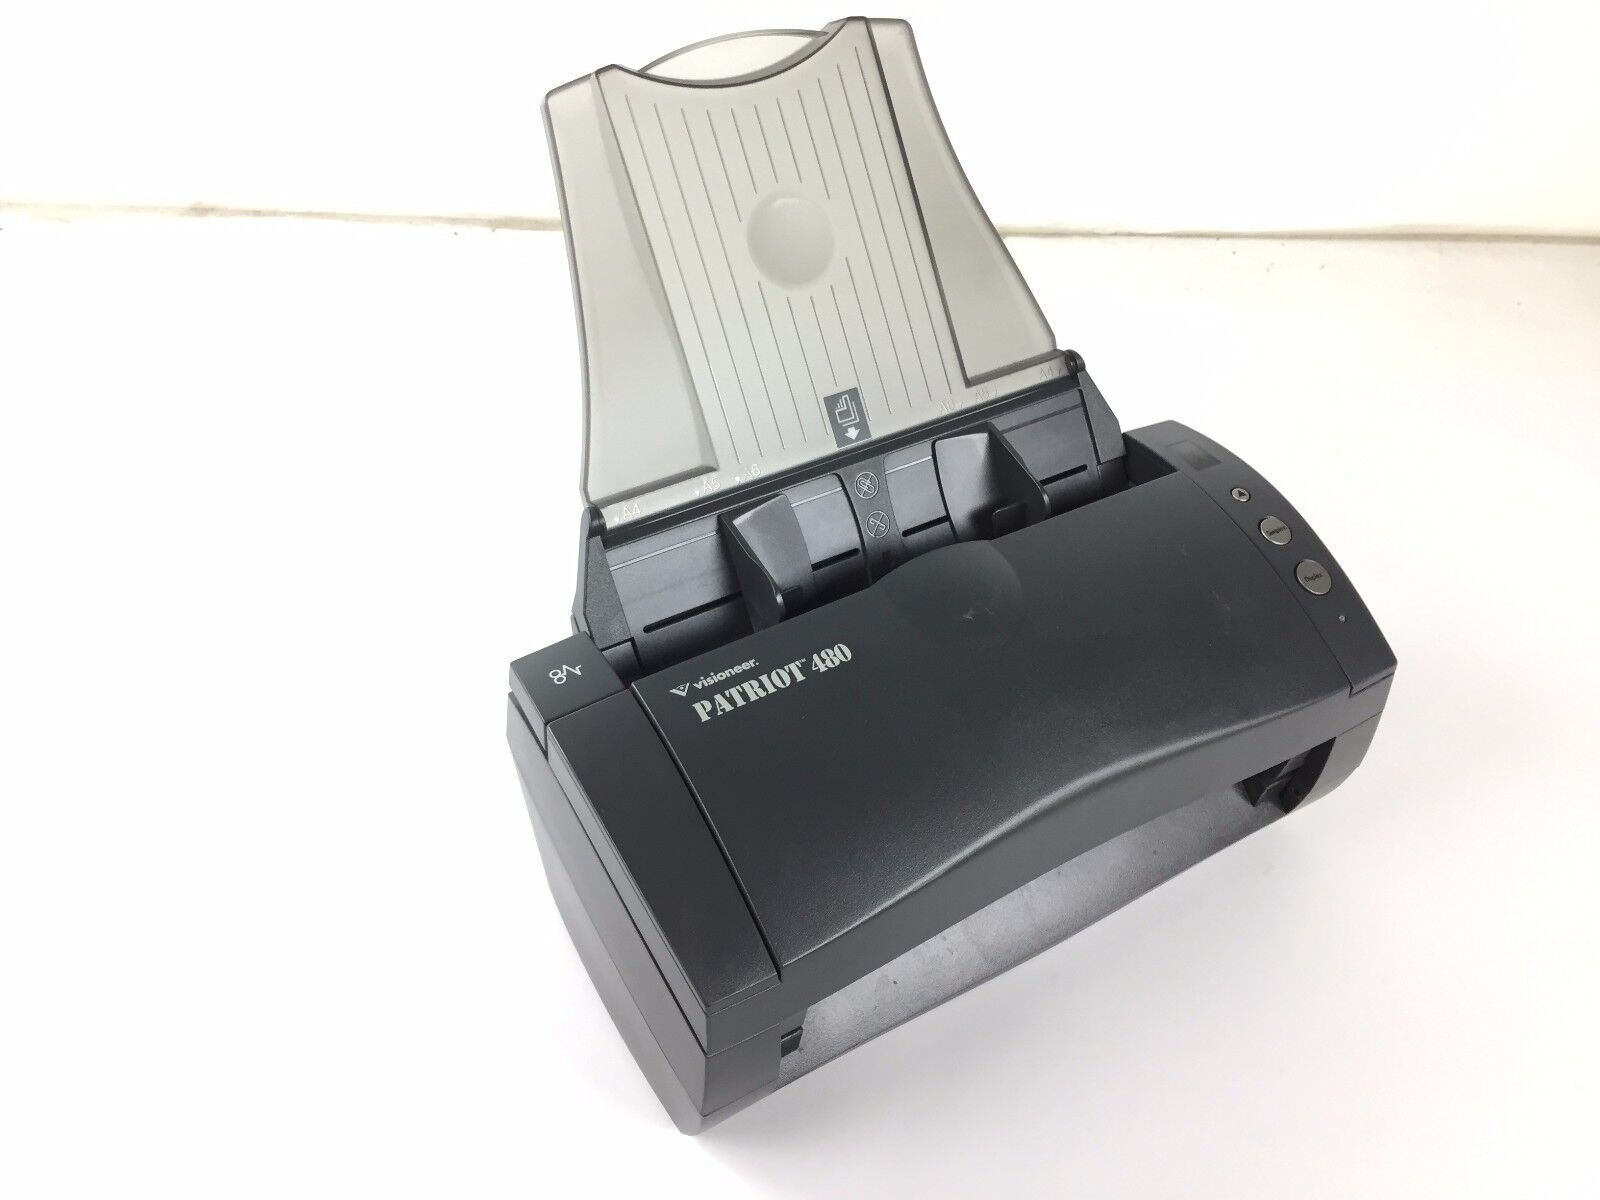 Visioneer Patriot 480 Document Feed Scanner Duplex USB - Parts or Repair